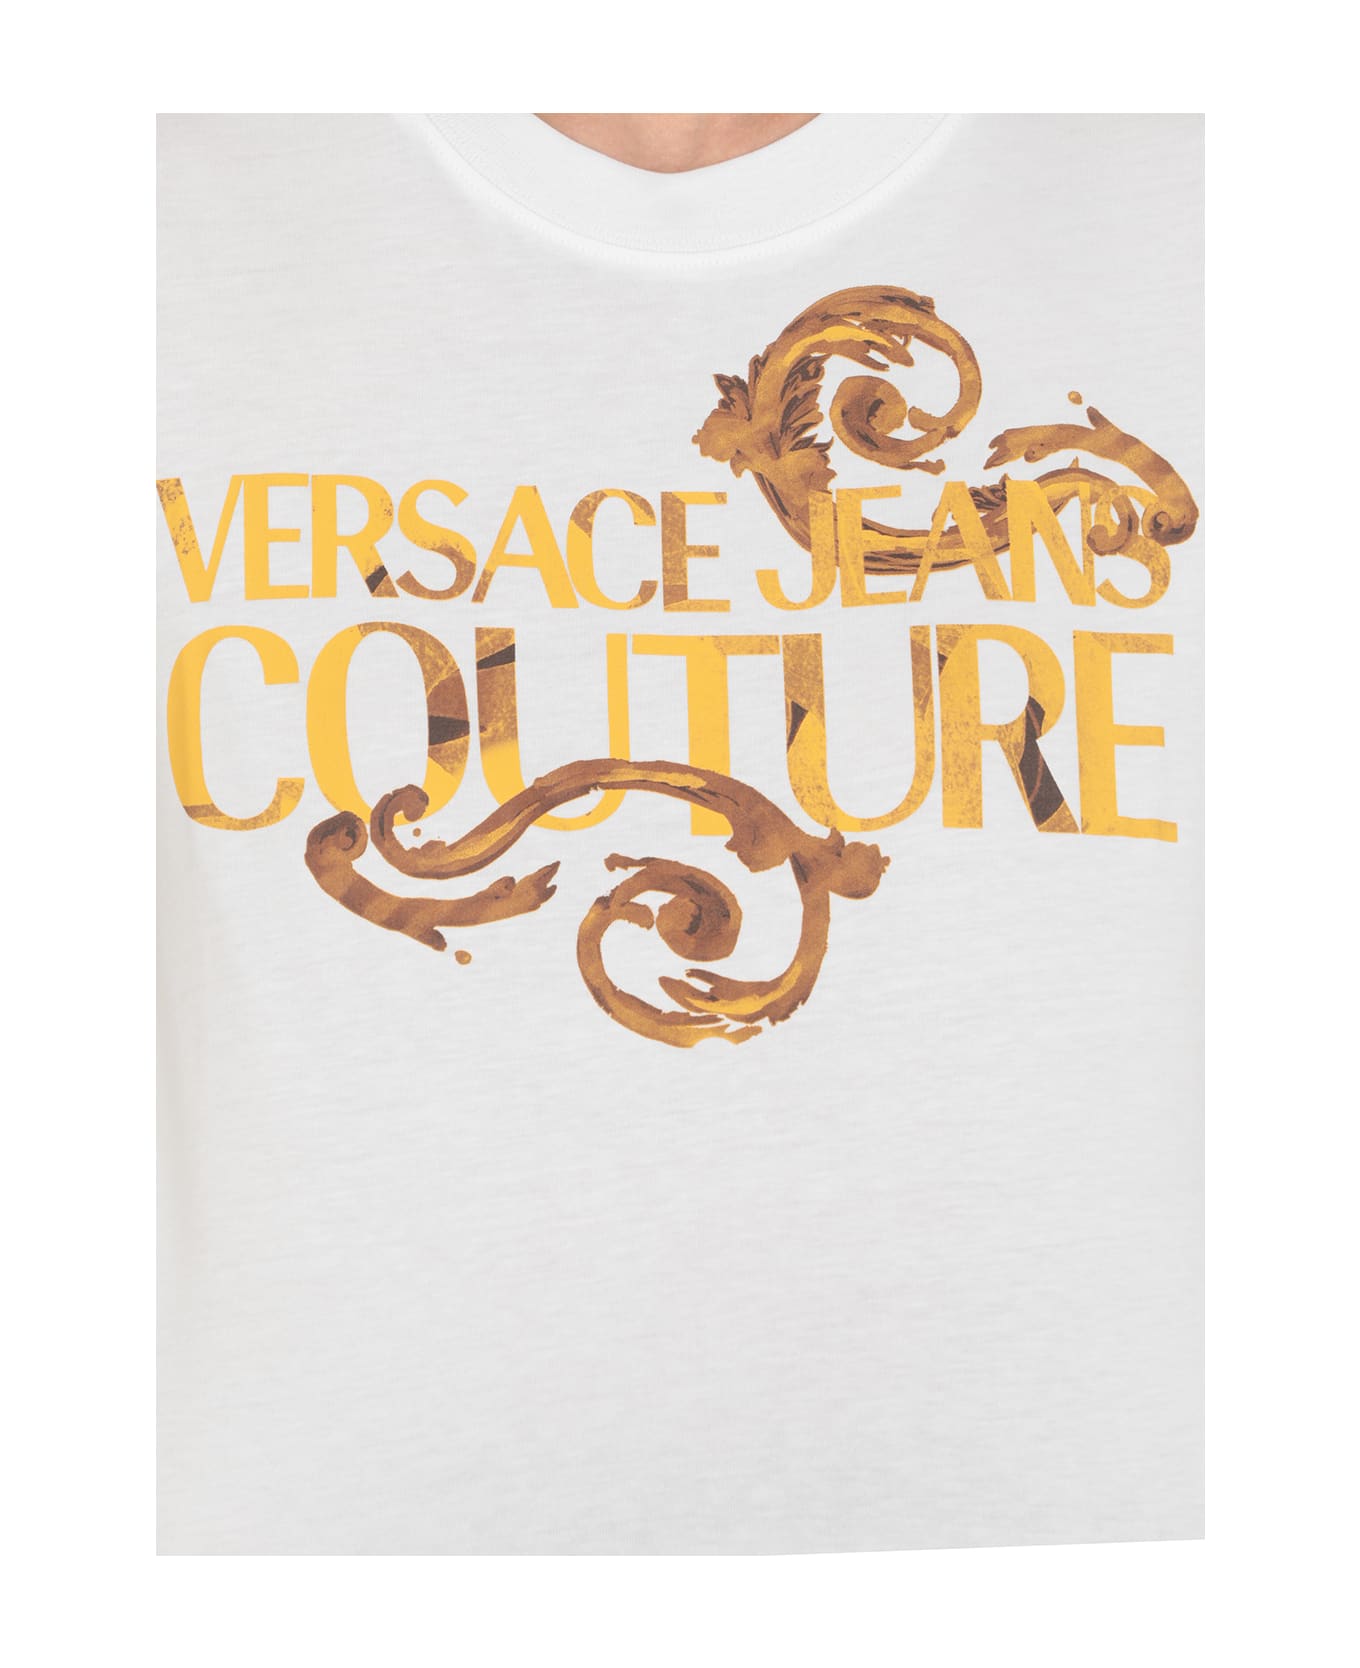 Versace Jeans Couture Logo-print Cotton T-shirt - White